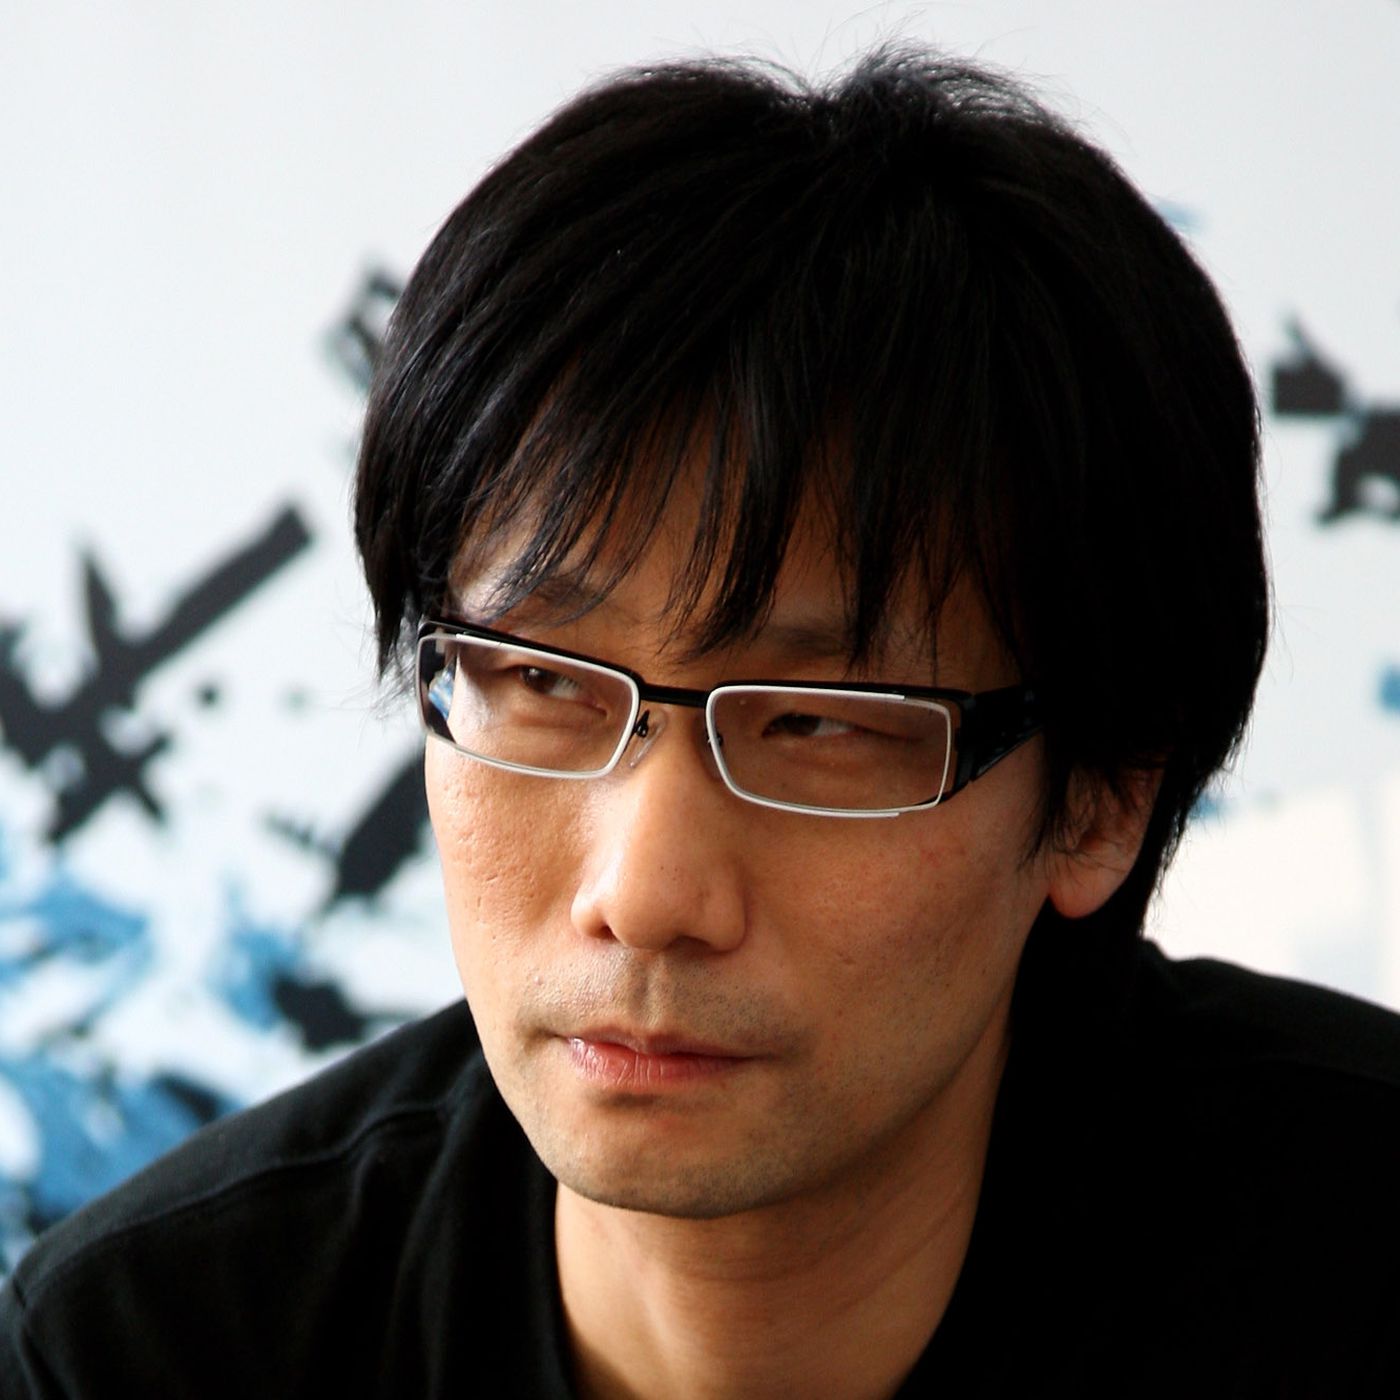 Konami won't let Hideo Kojima accept an award for Metal Gear Solid V